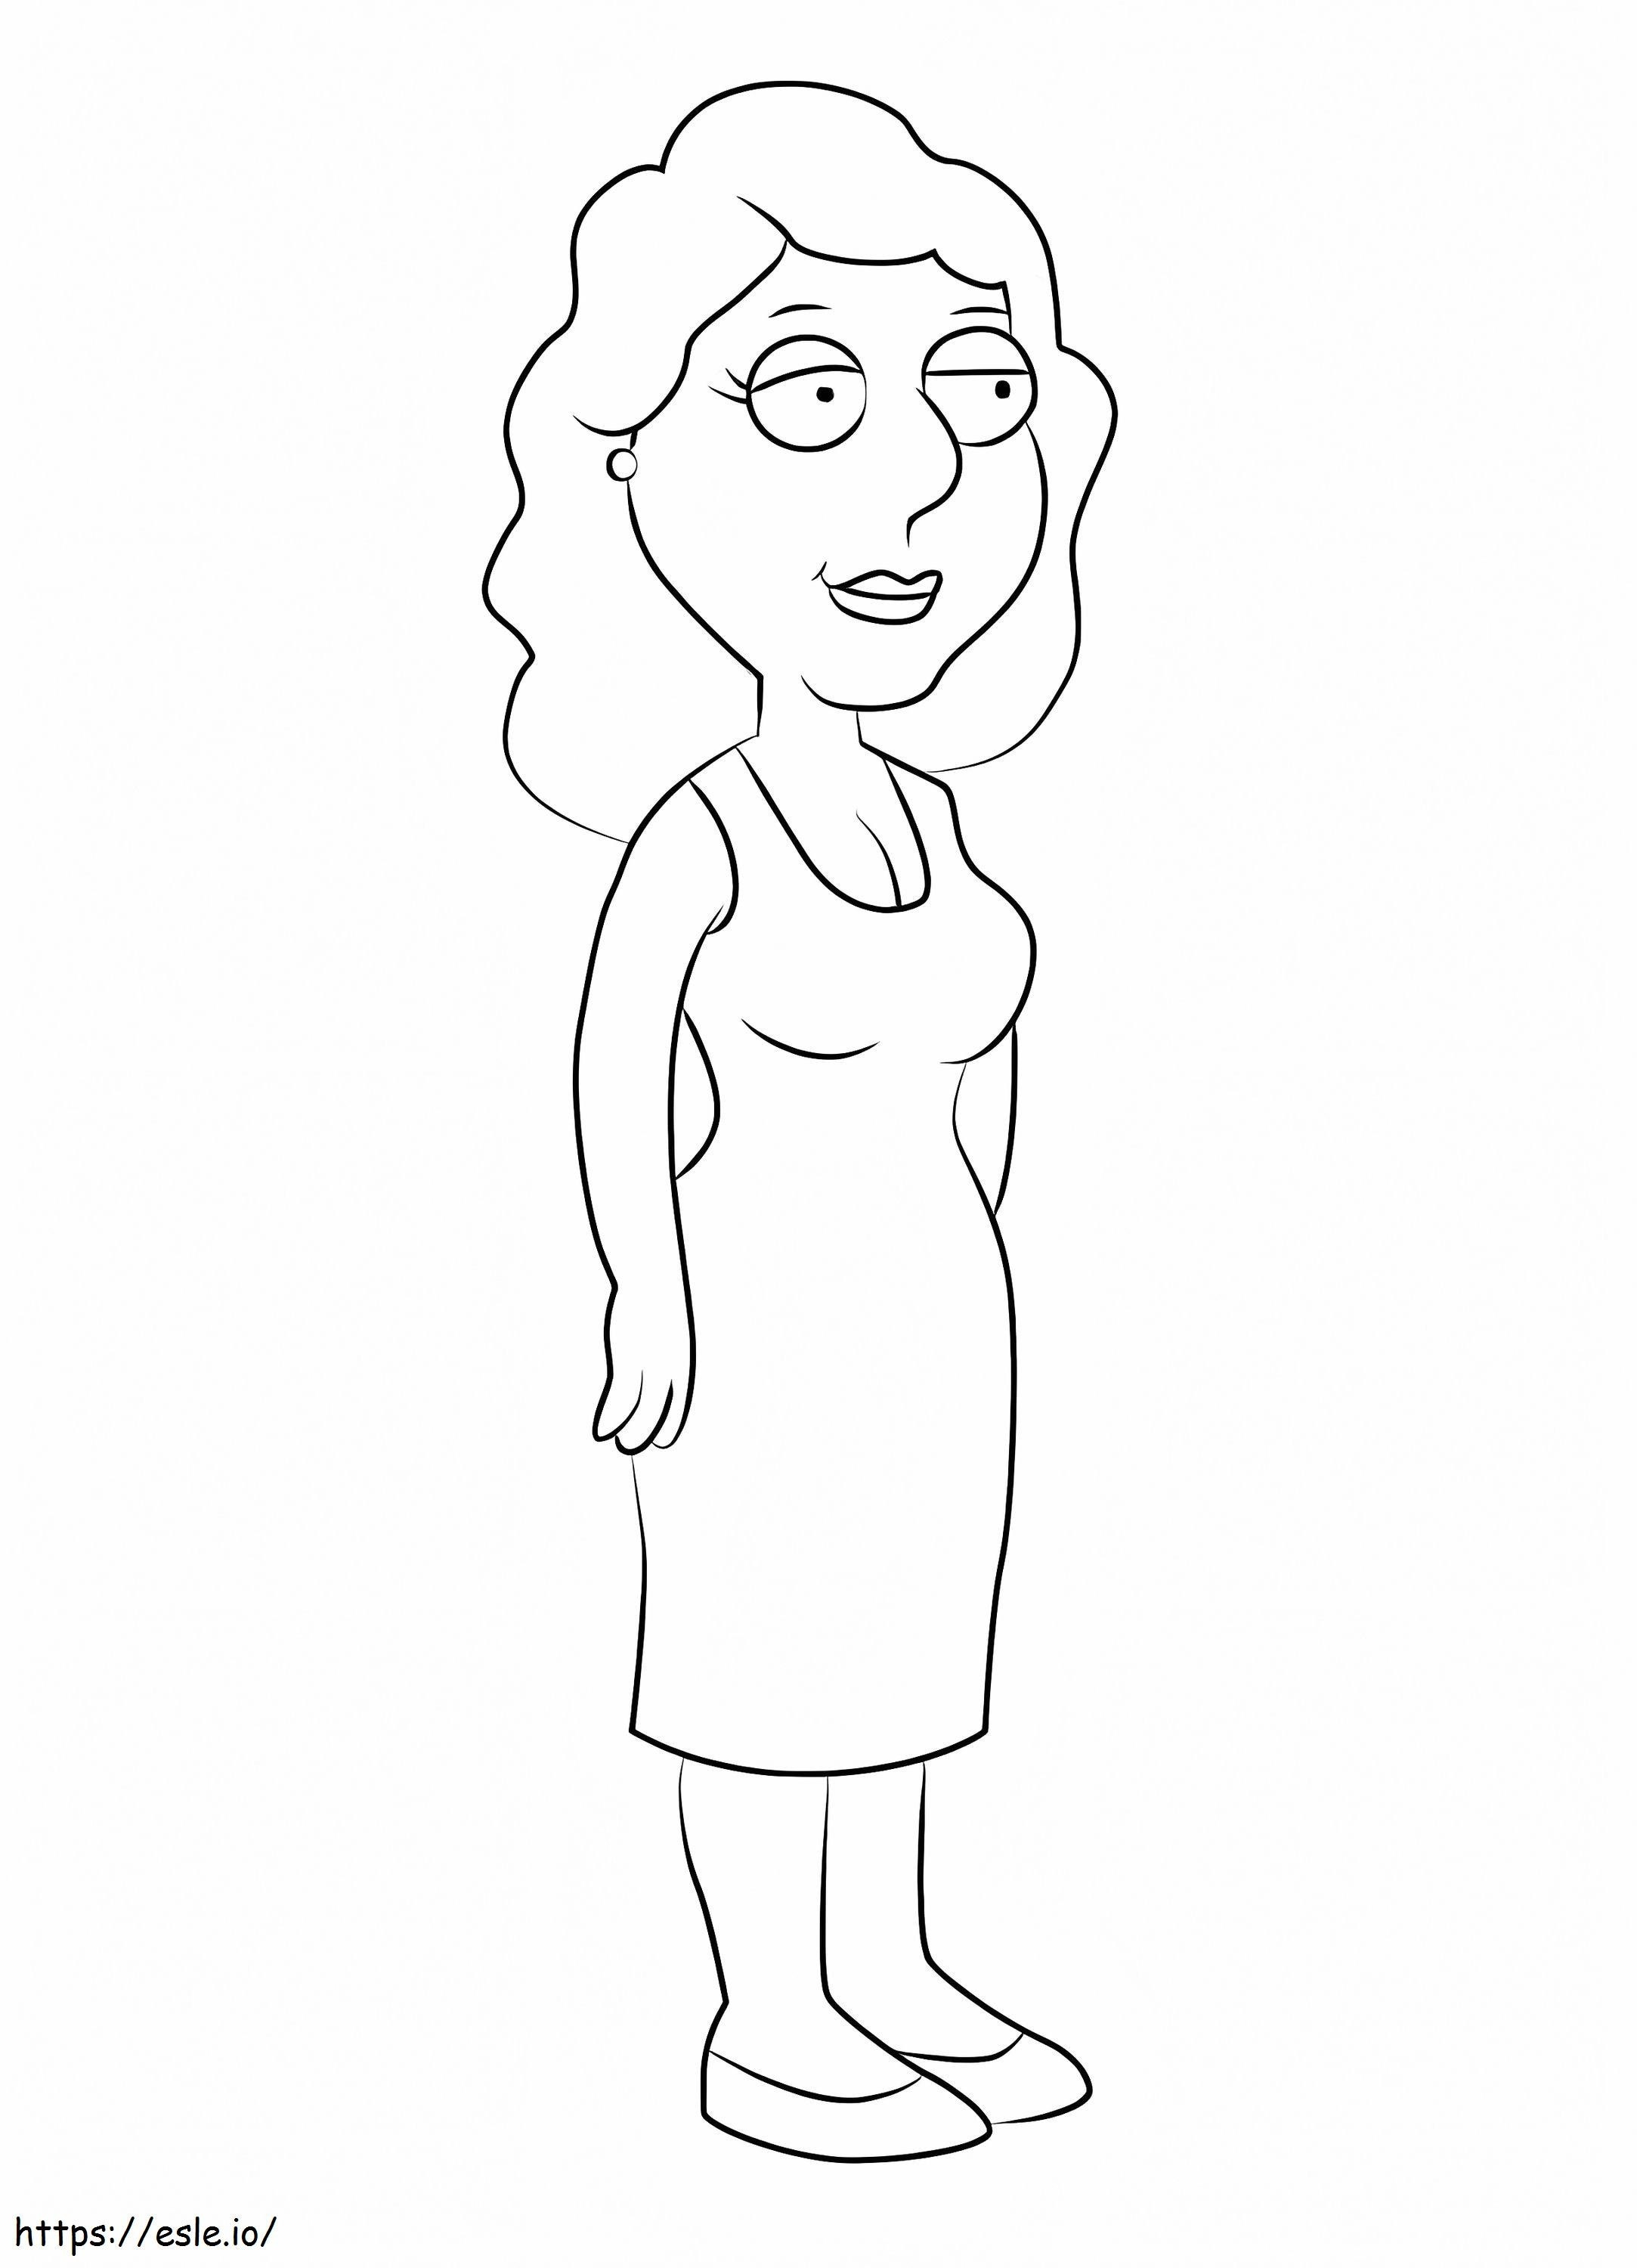 Bonnie Swanson Family Guy ausmalbilder